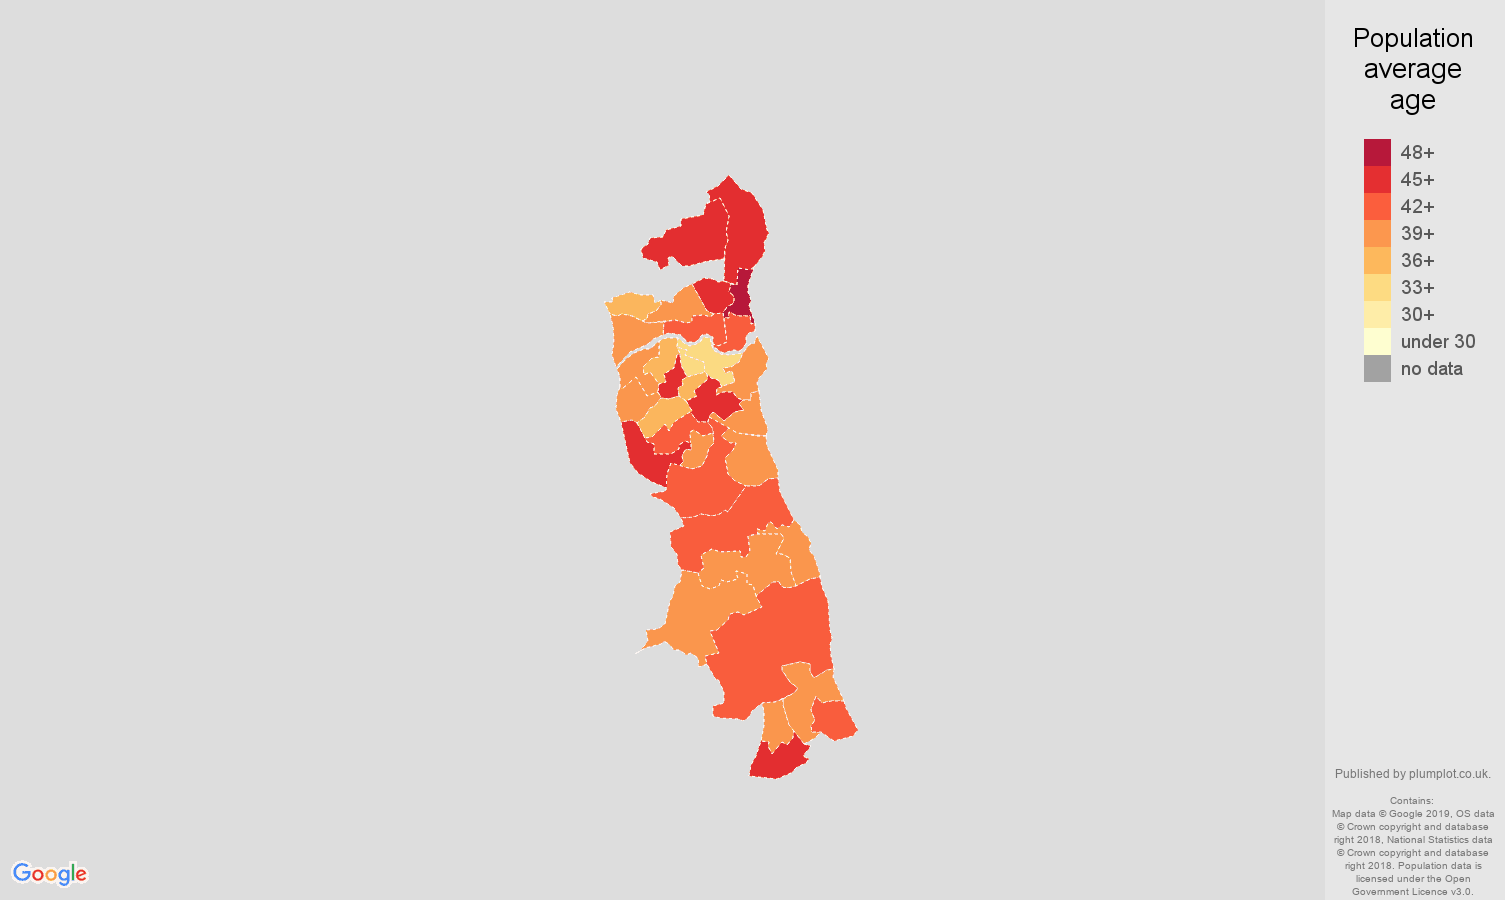 Sunderland population average age map